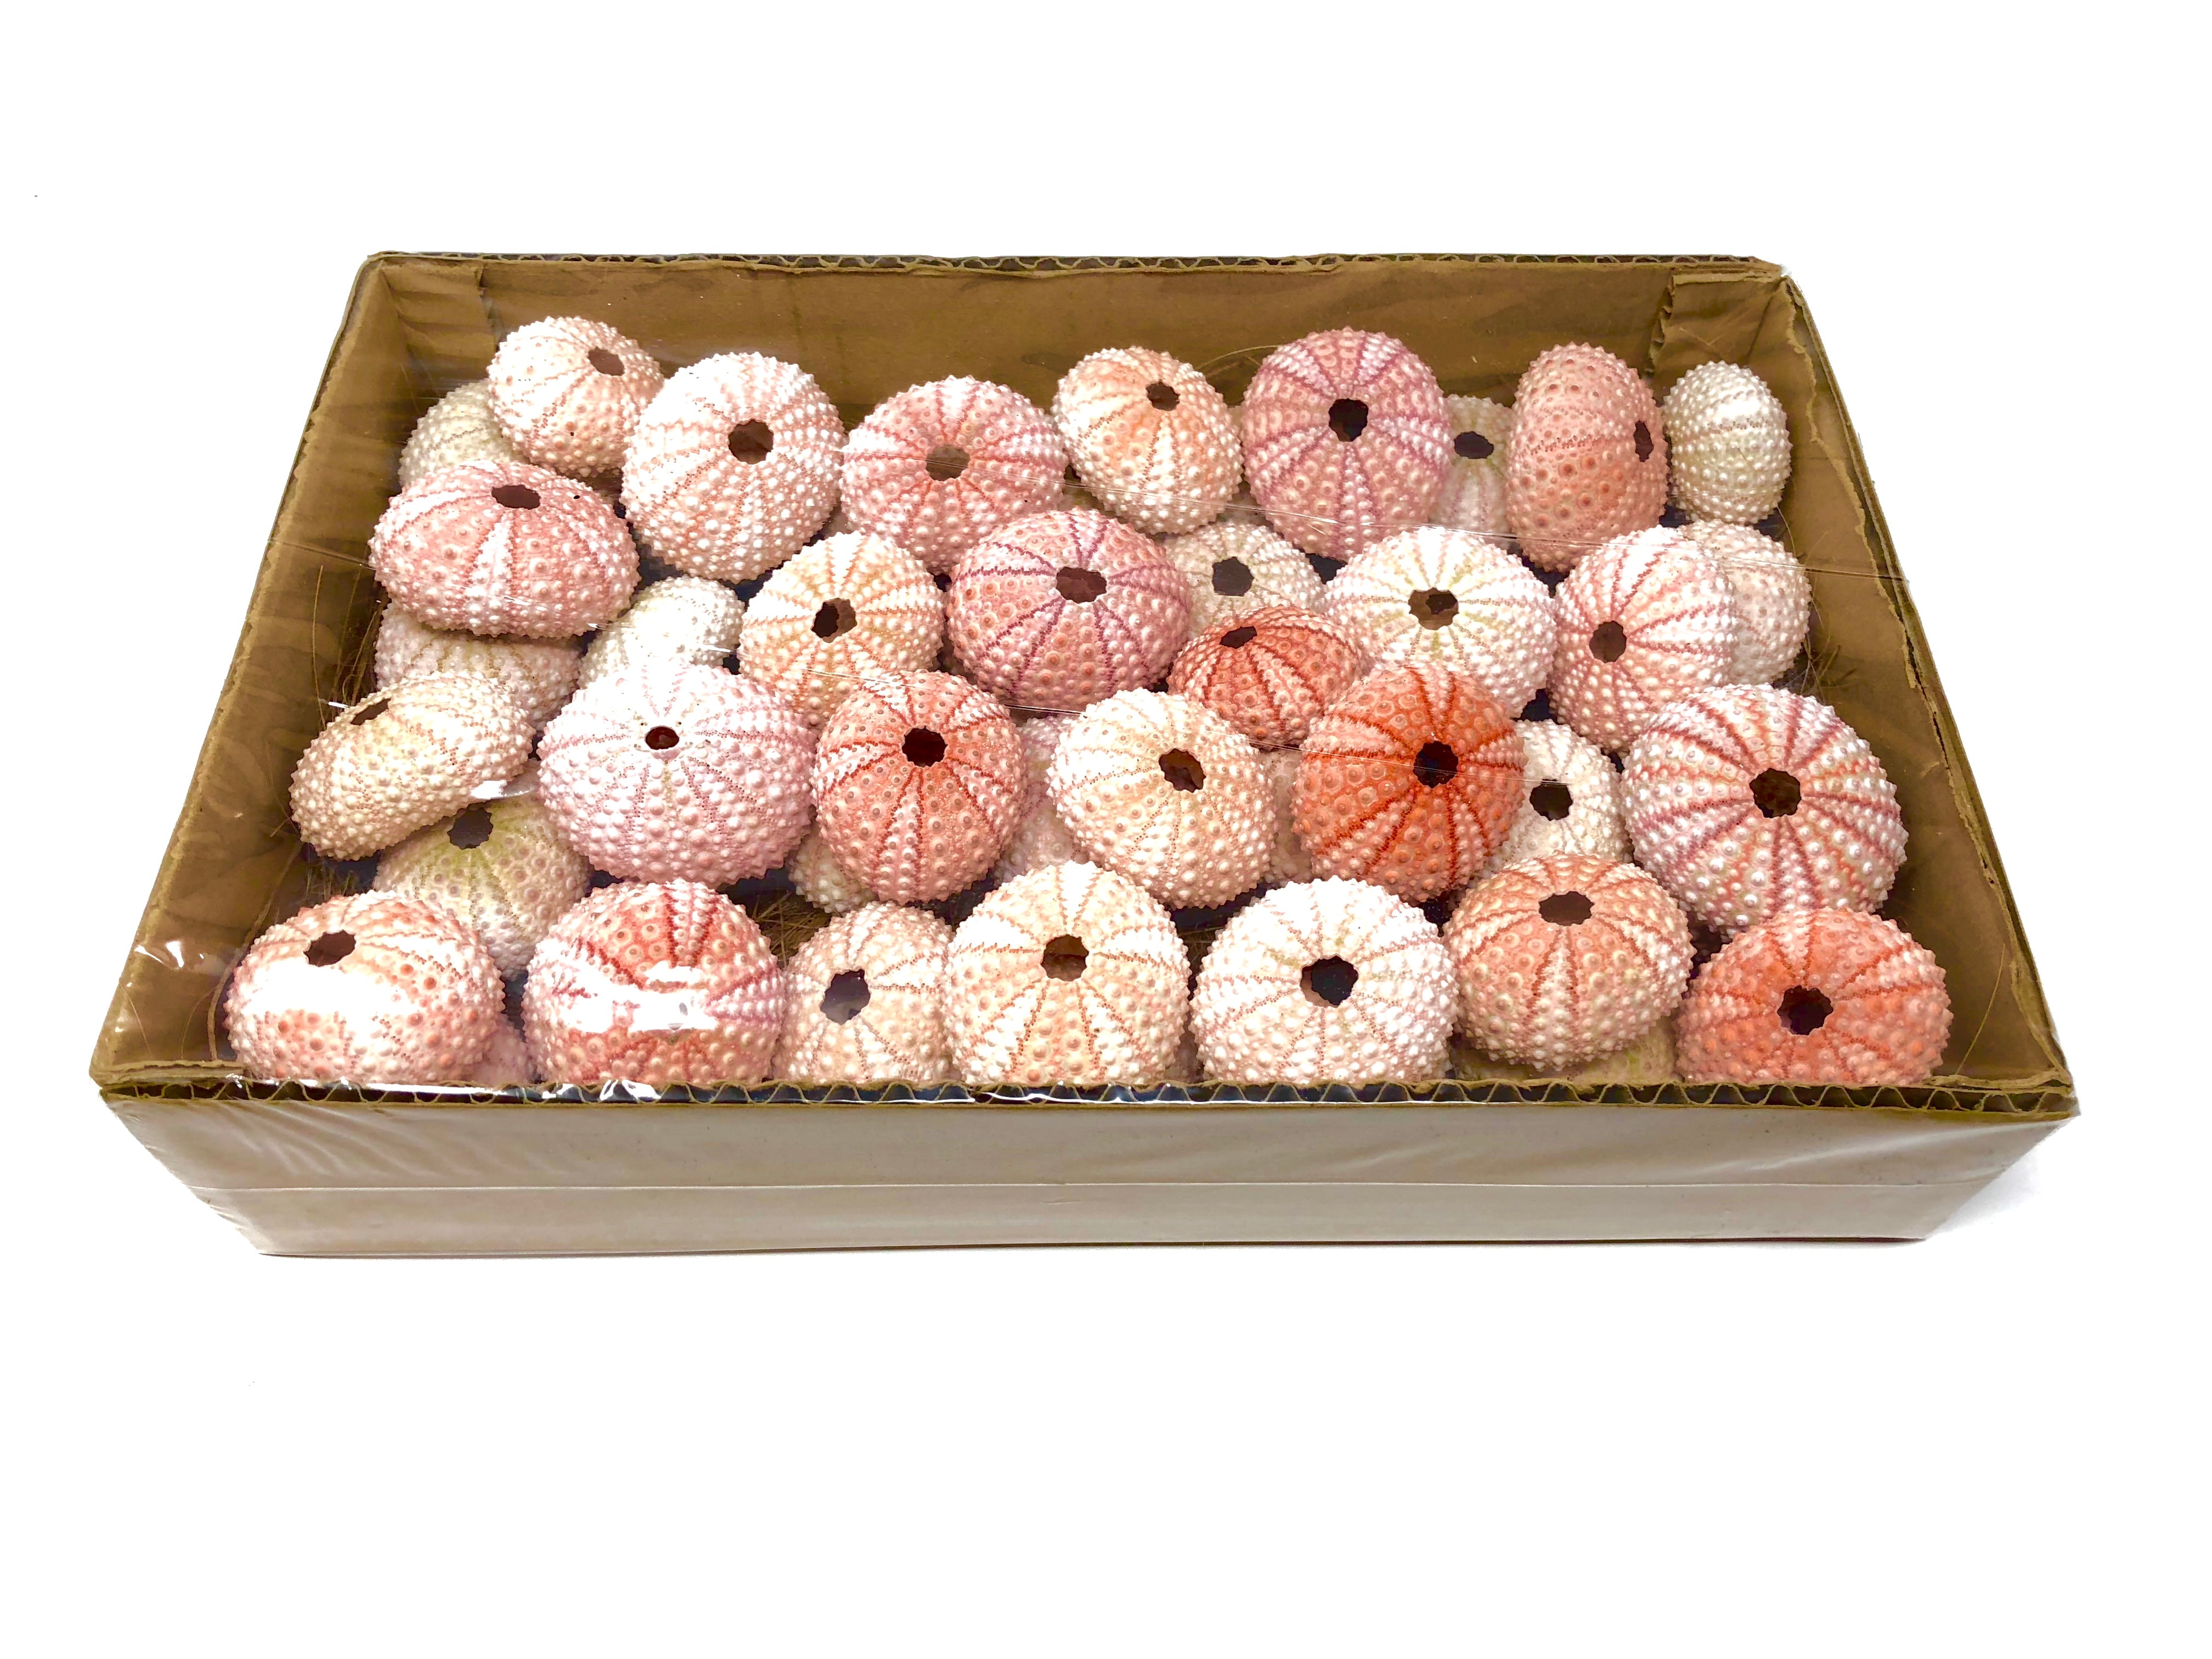 Bulk Lot of 100+ Sea Urchin Shells (1.5" - 2") $1.00 Per Shell - Air Plant Hub 